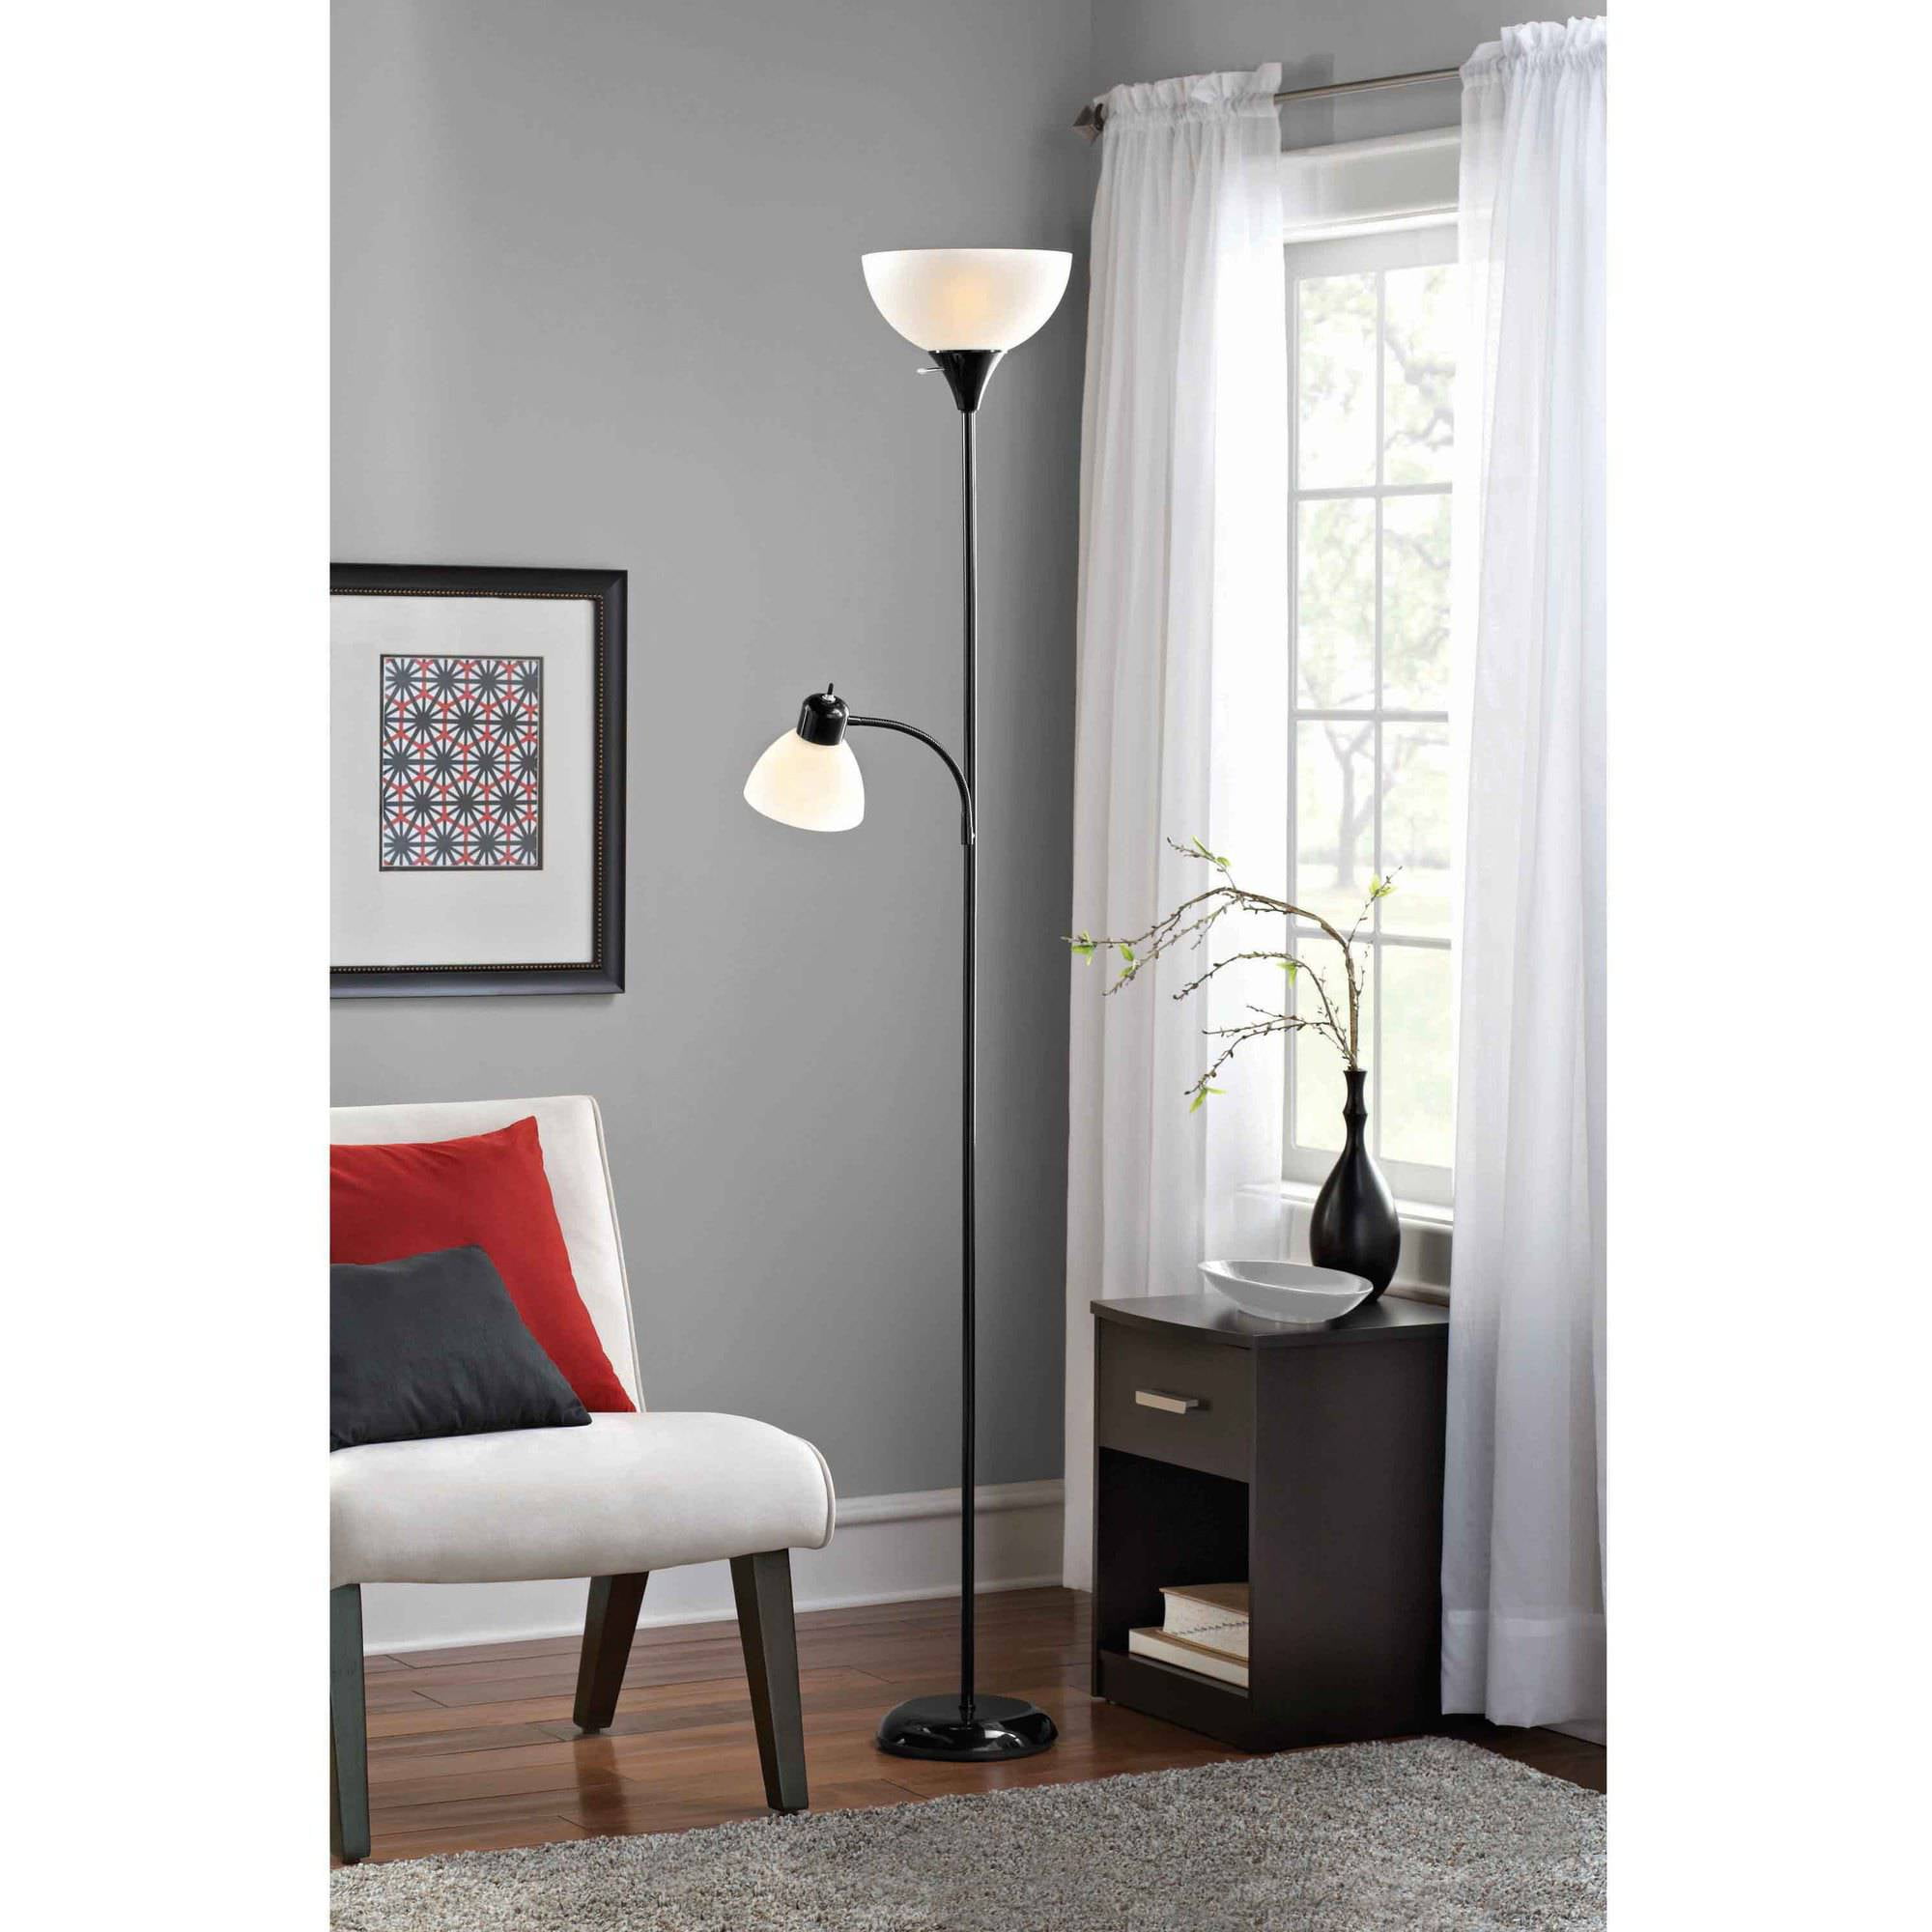 Mainstays Combo Floor Lamp with Bulbs Included - Walmart.com